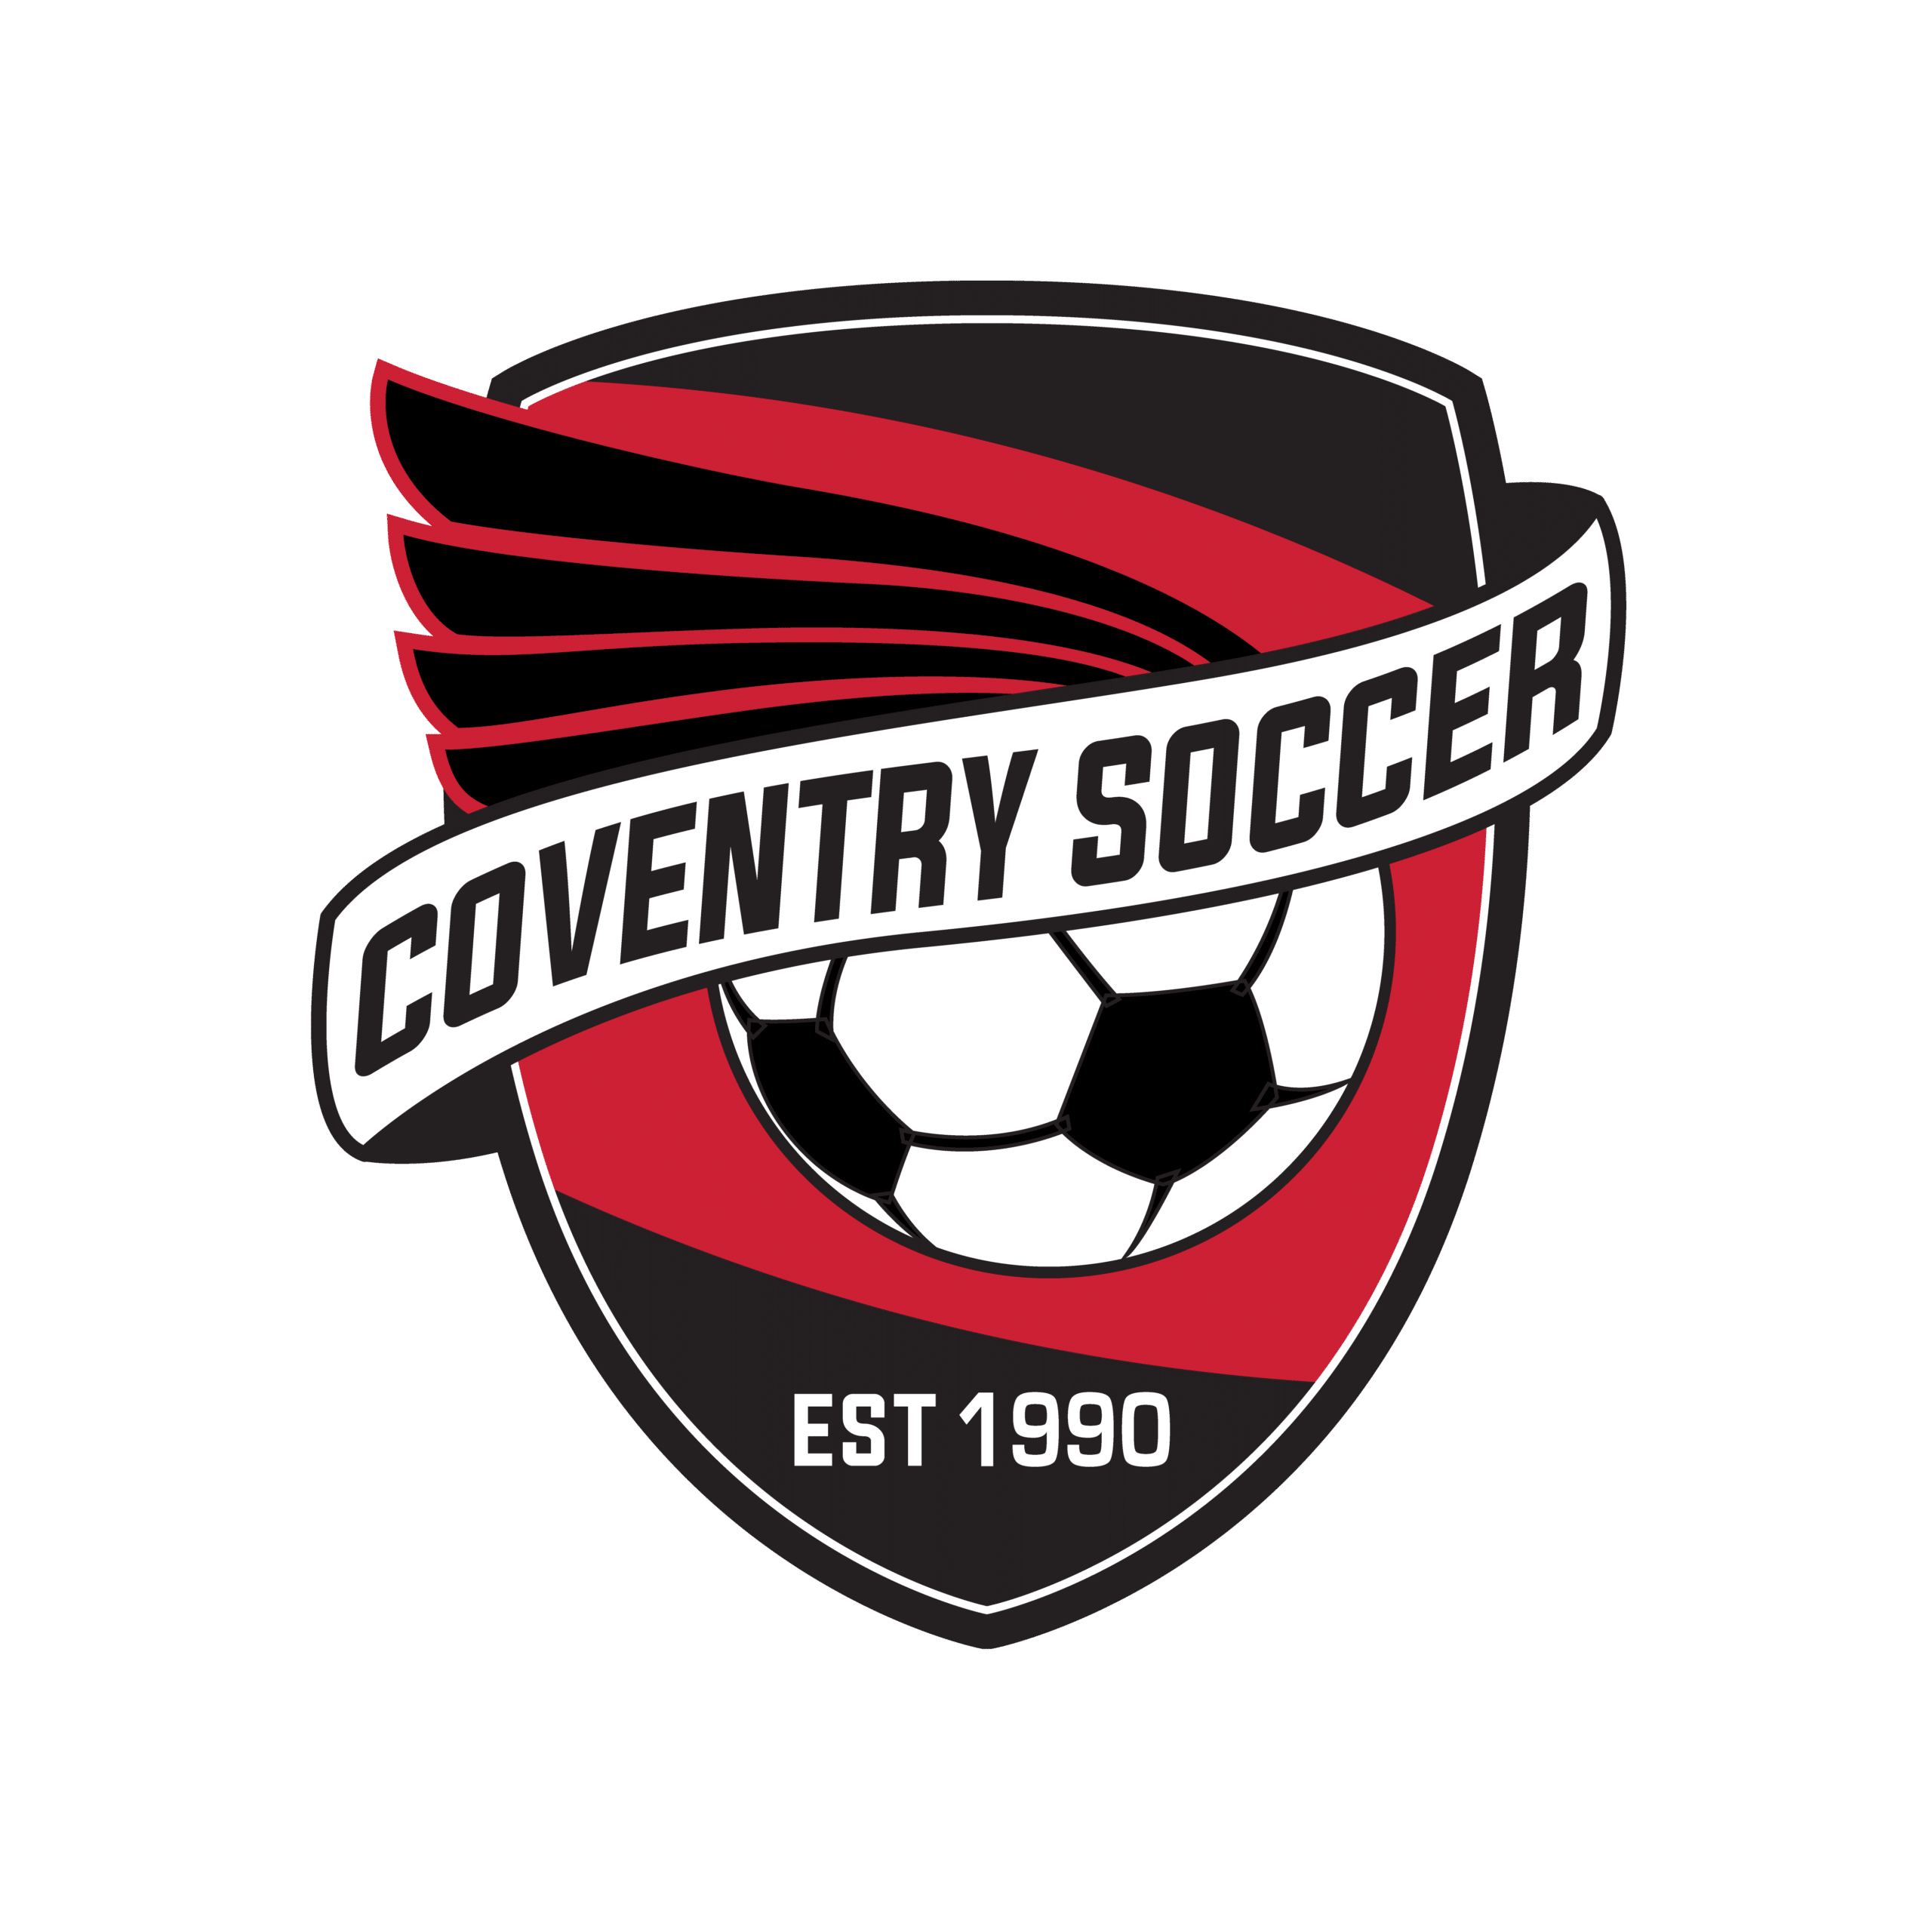 Coventry Soccer Association